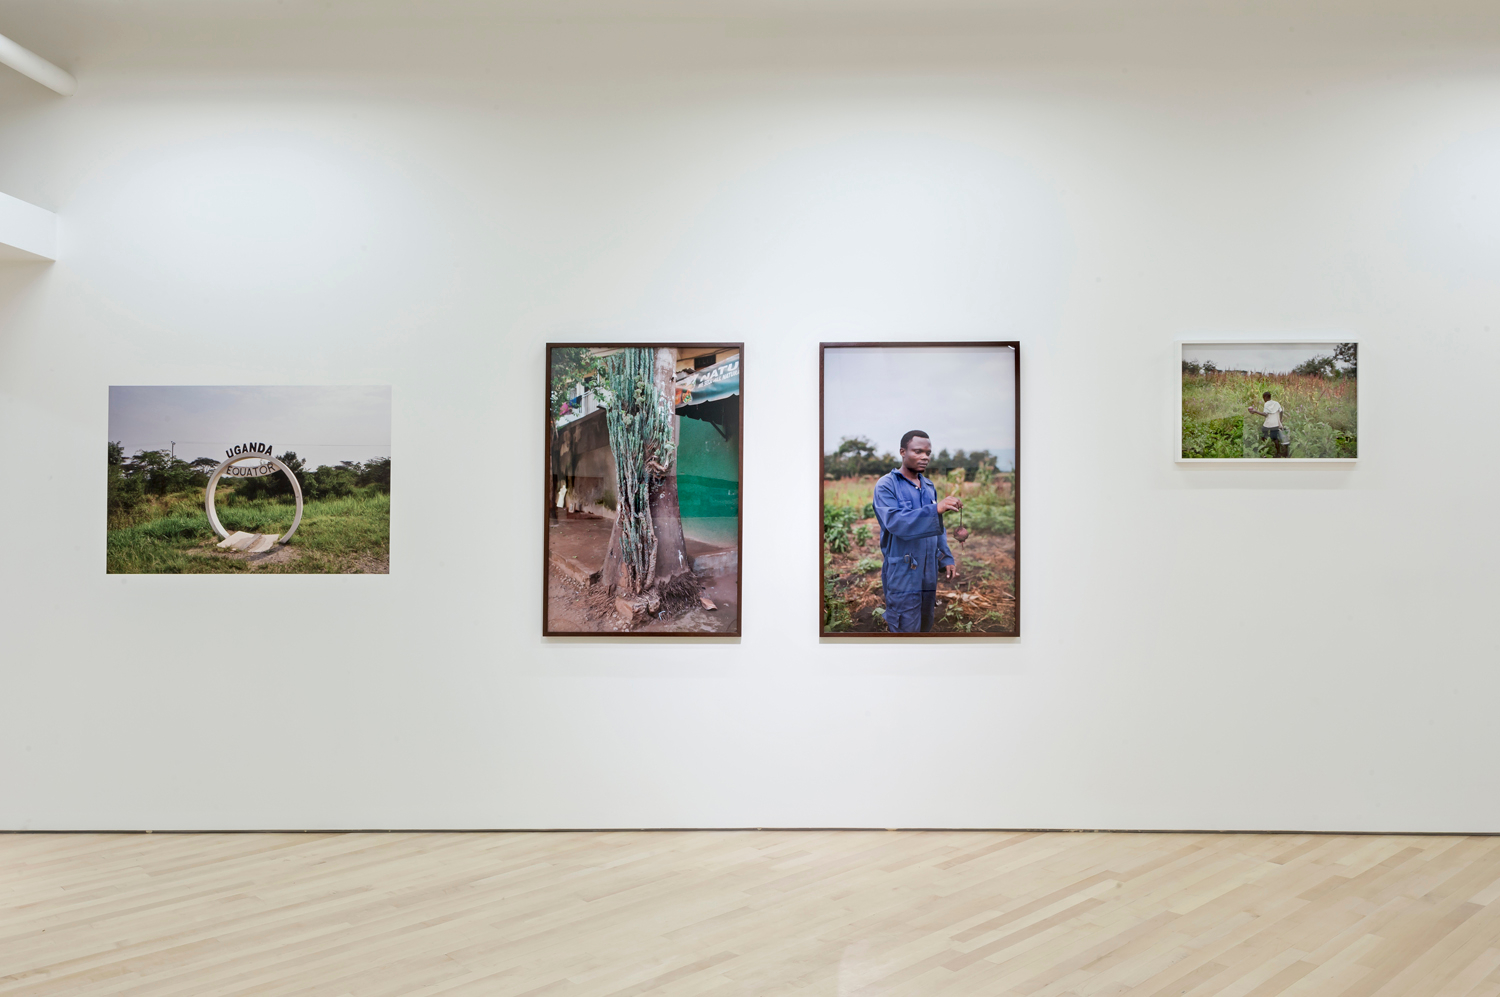     Installation view of Johan Hallberg-Campbell, Nzirambi, 2013

